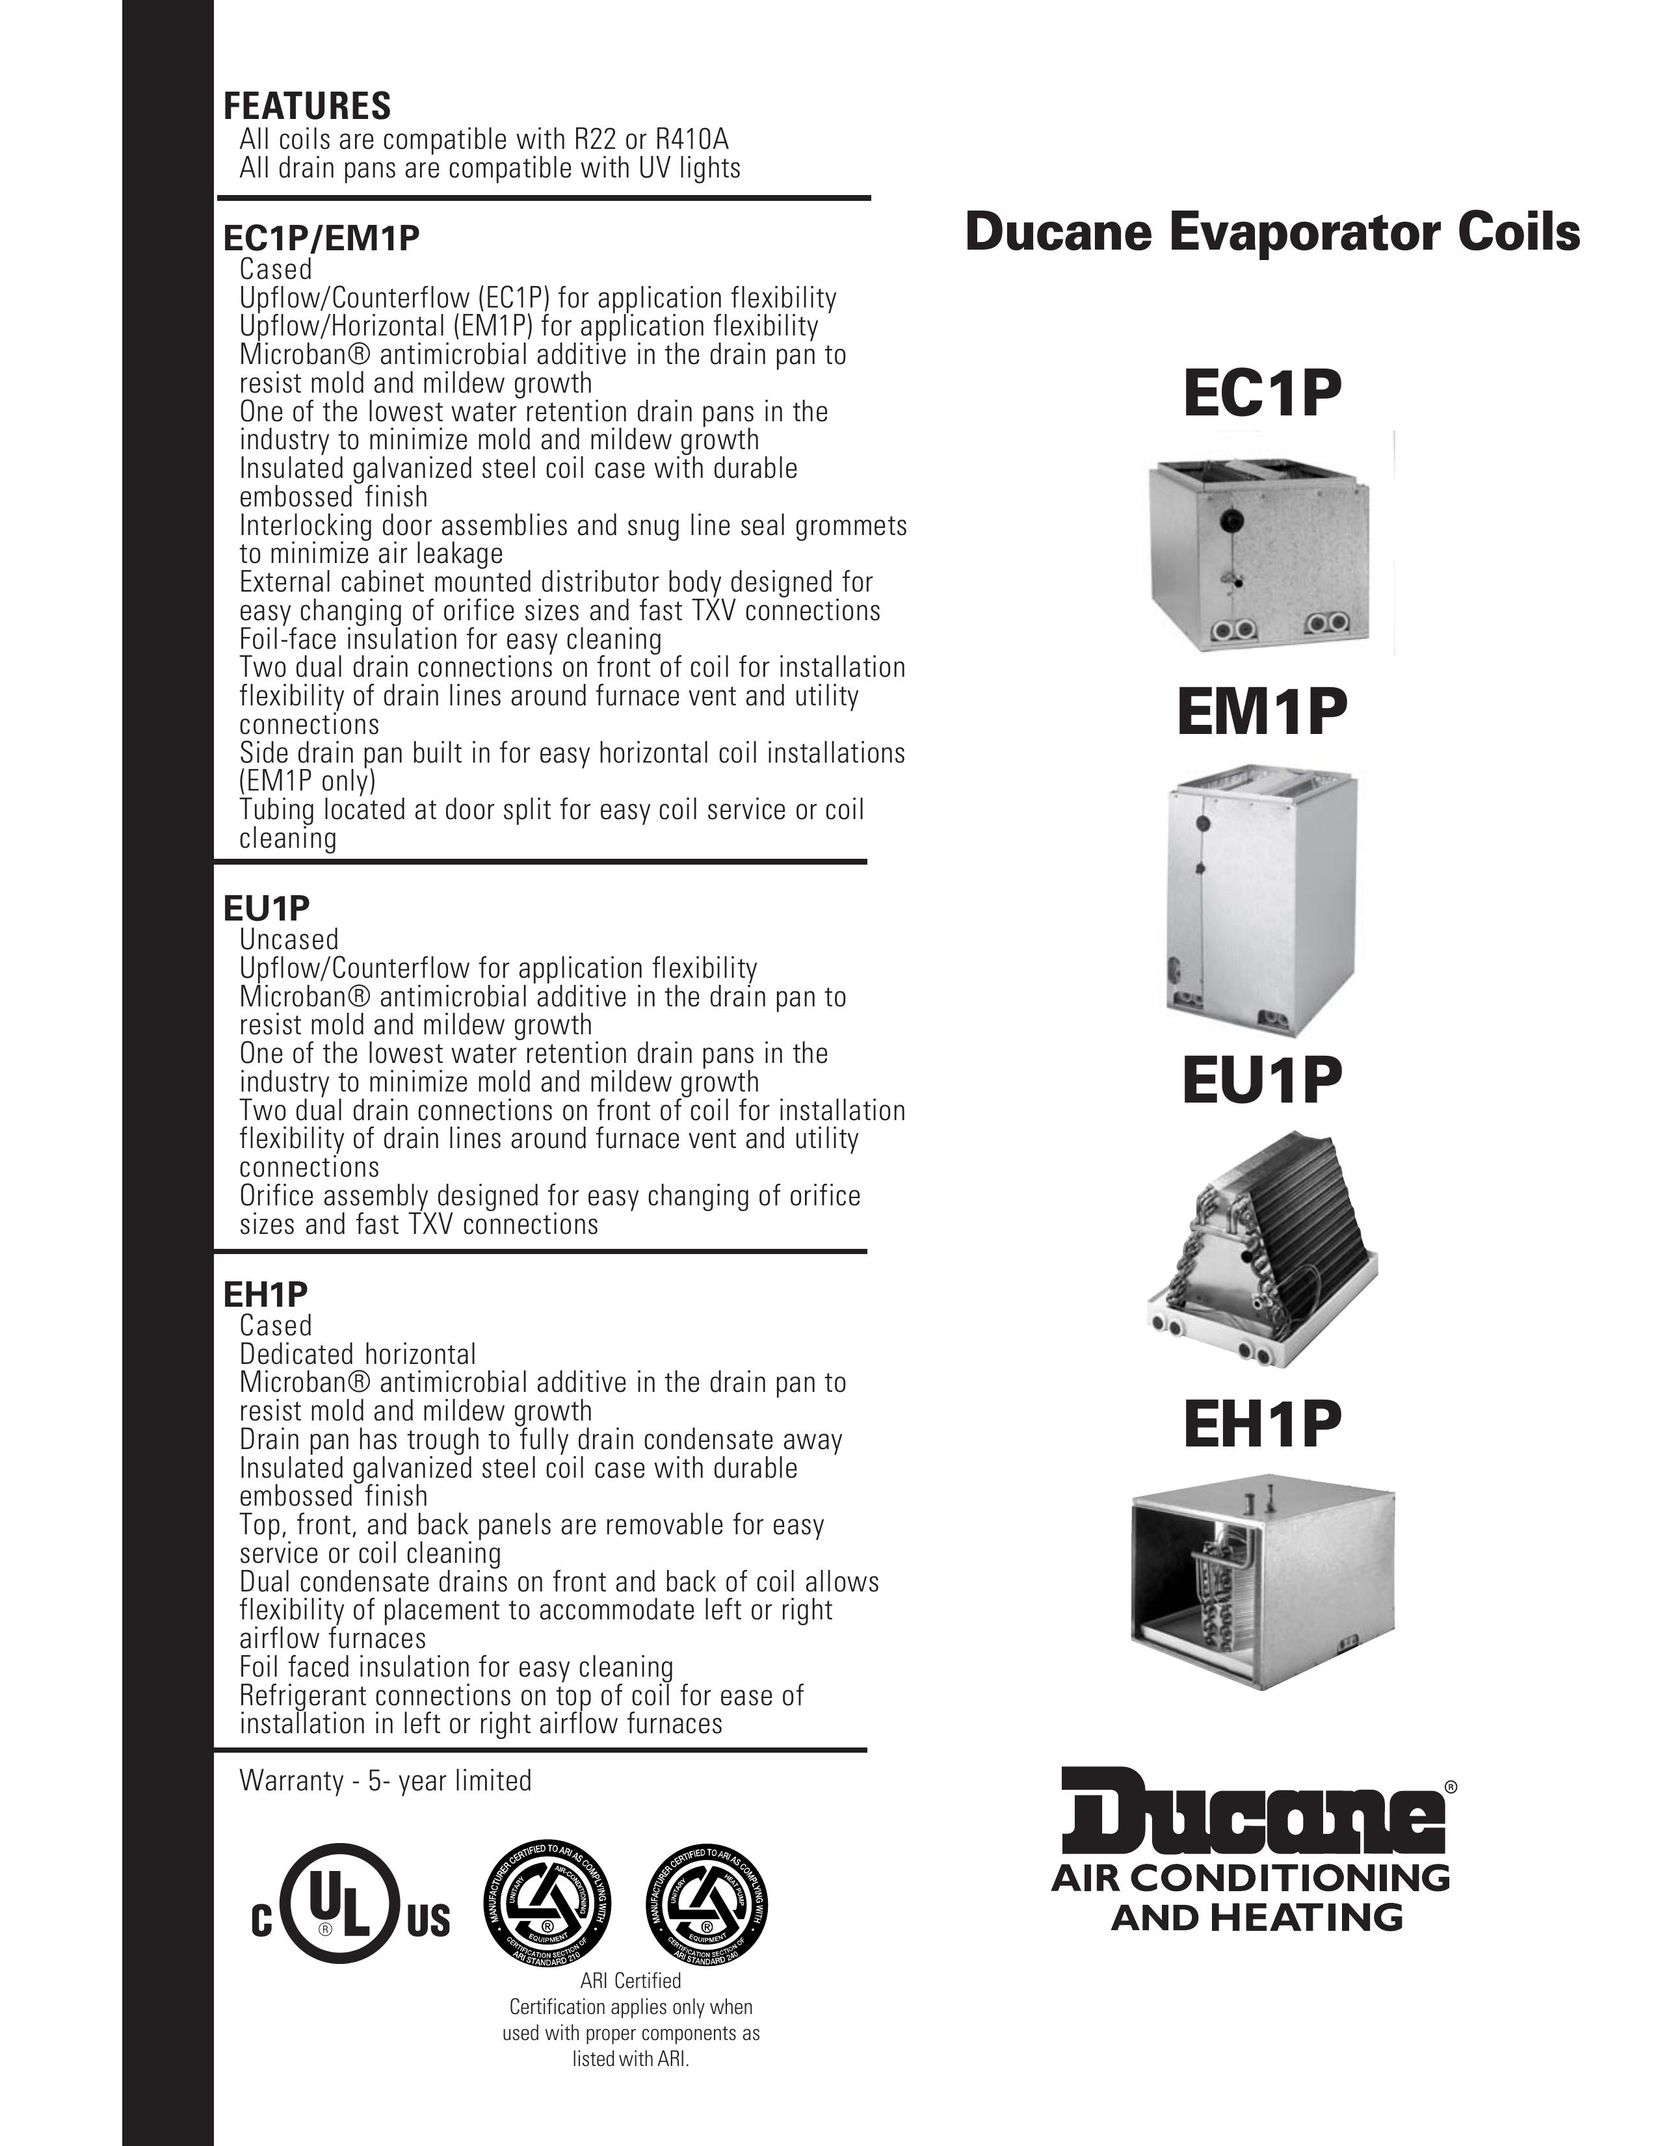 Ducane (HVAC) EU1P Air Conditioner User Manual